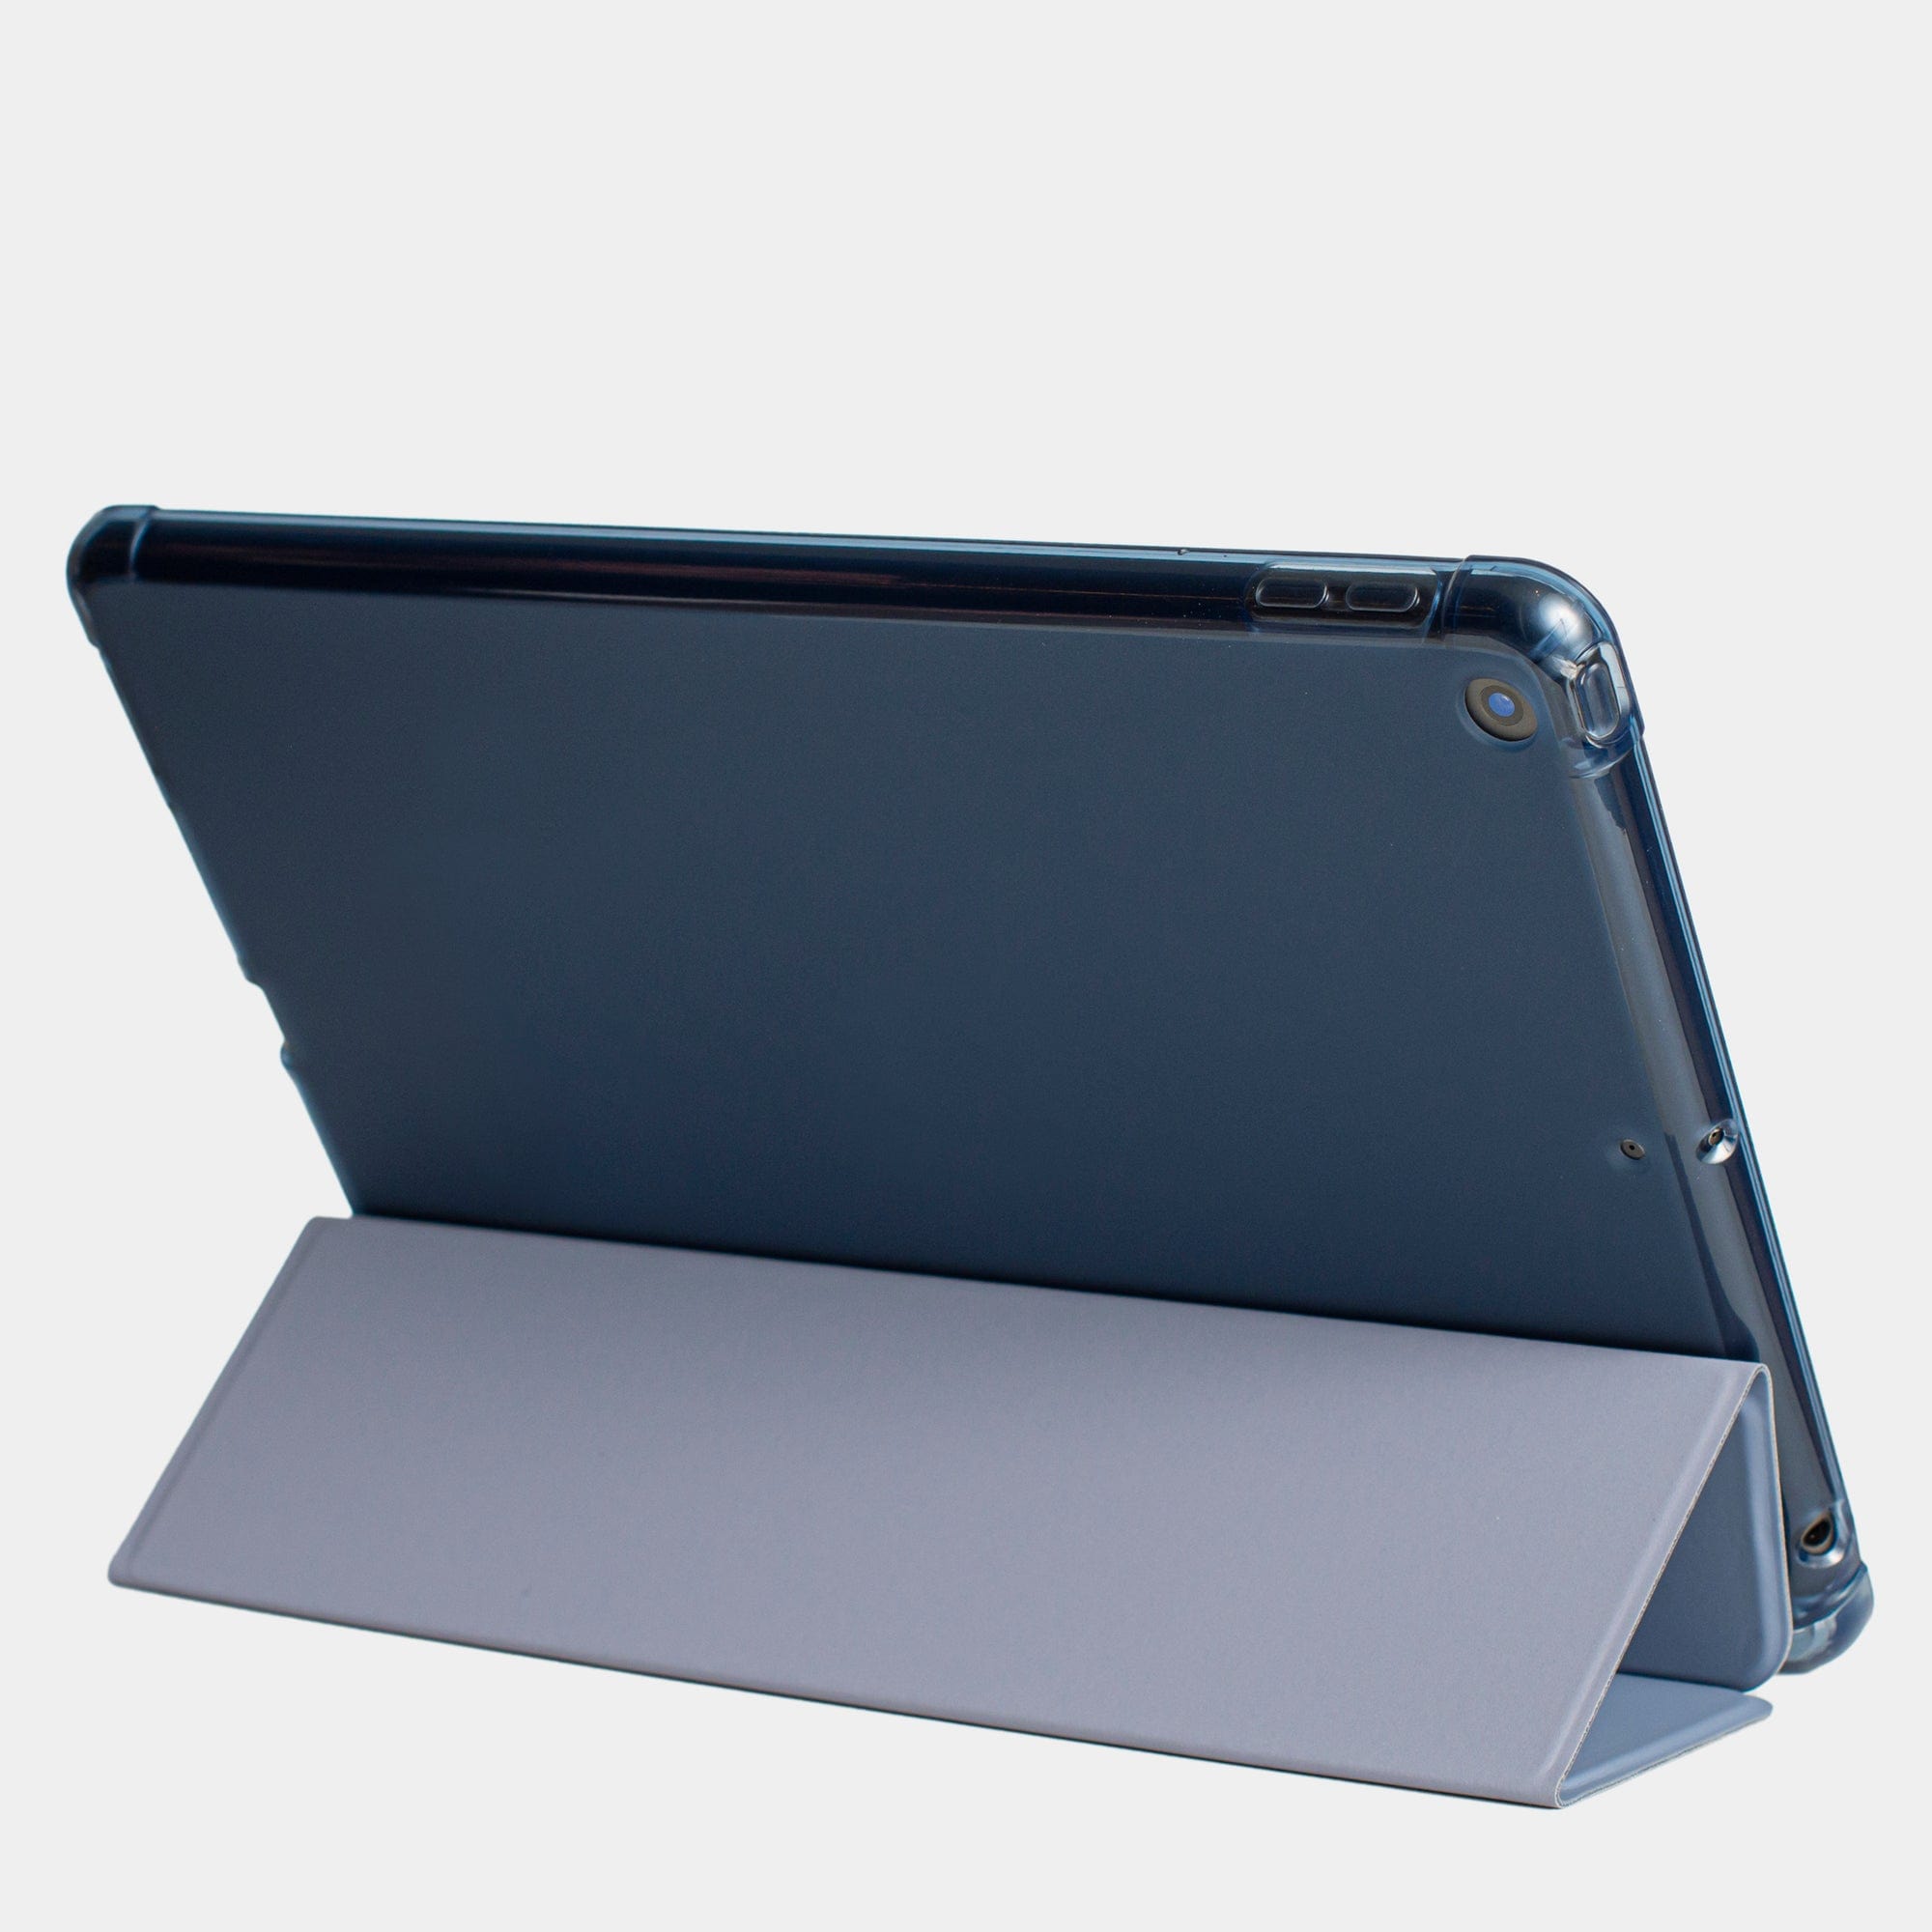 Comet iPad Personalized Case